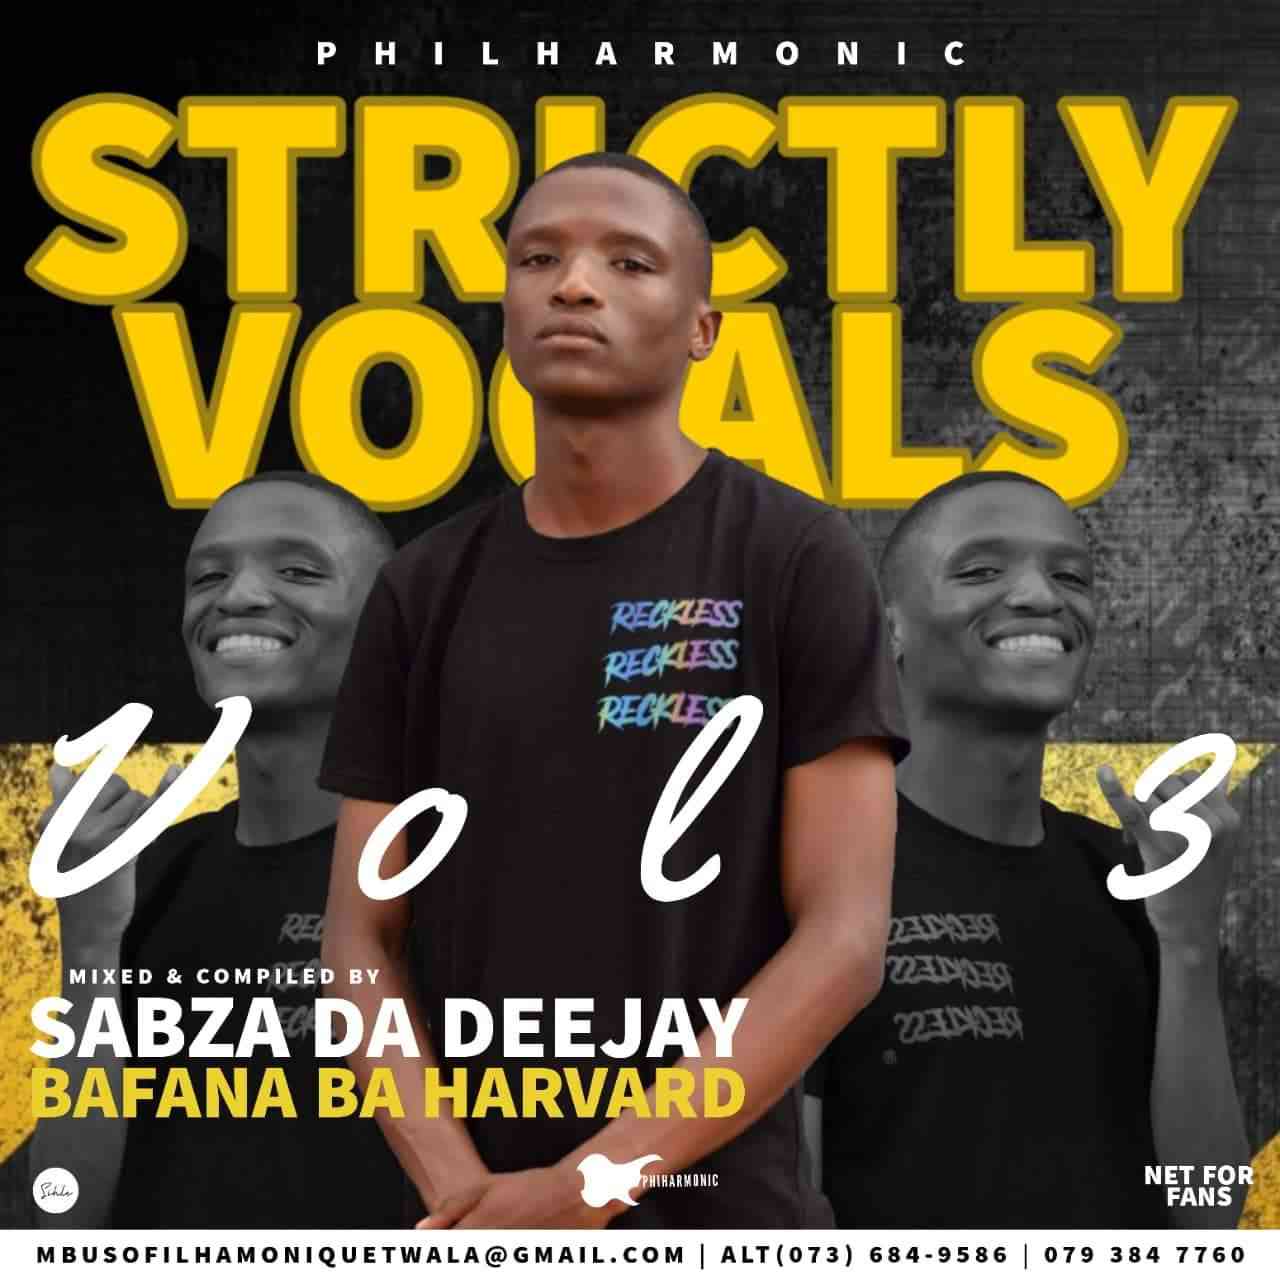 Philharmonic, Bafana Ba Harvard & Sabza Da Deejay - Philharmonic Strictly Vocals Vol. 3